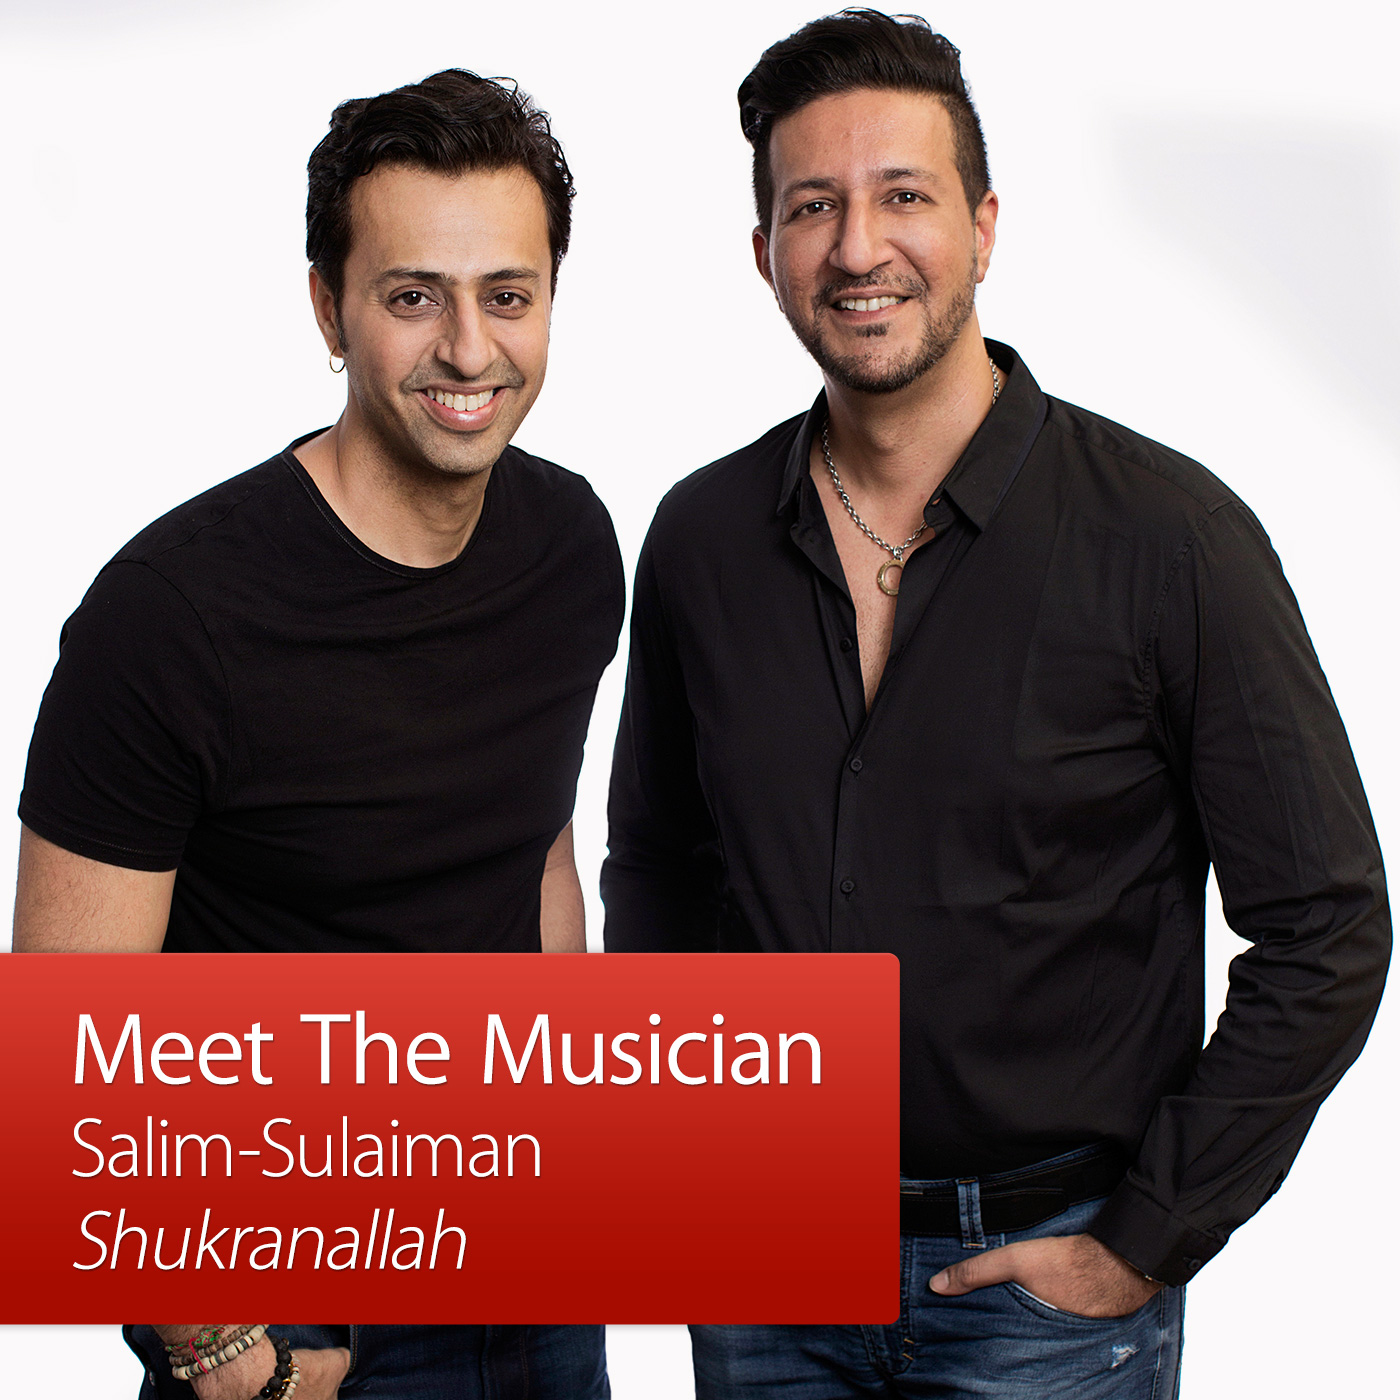 Meet the Musician: Salim-Sulaiman